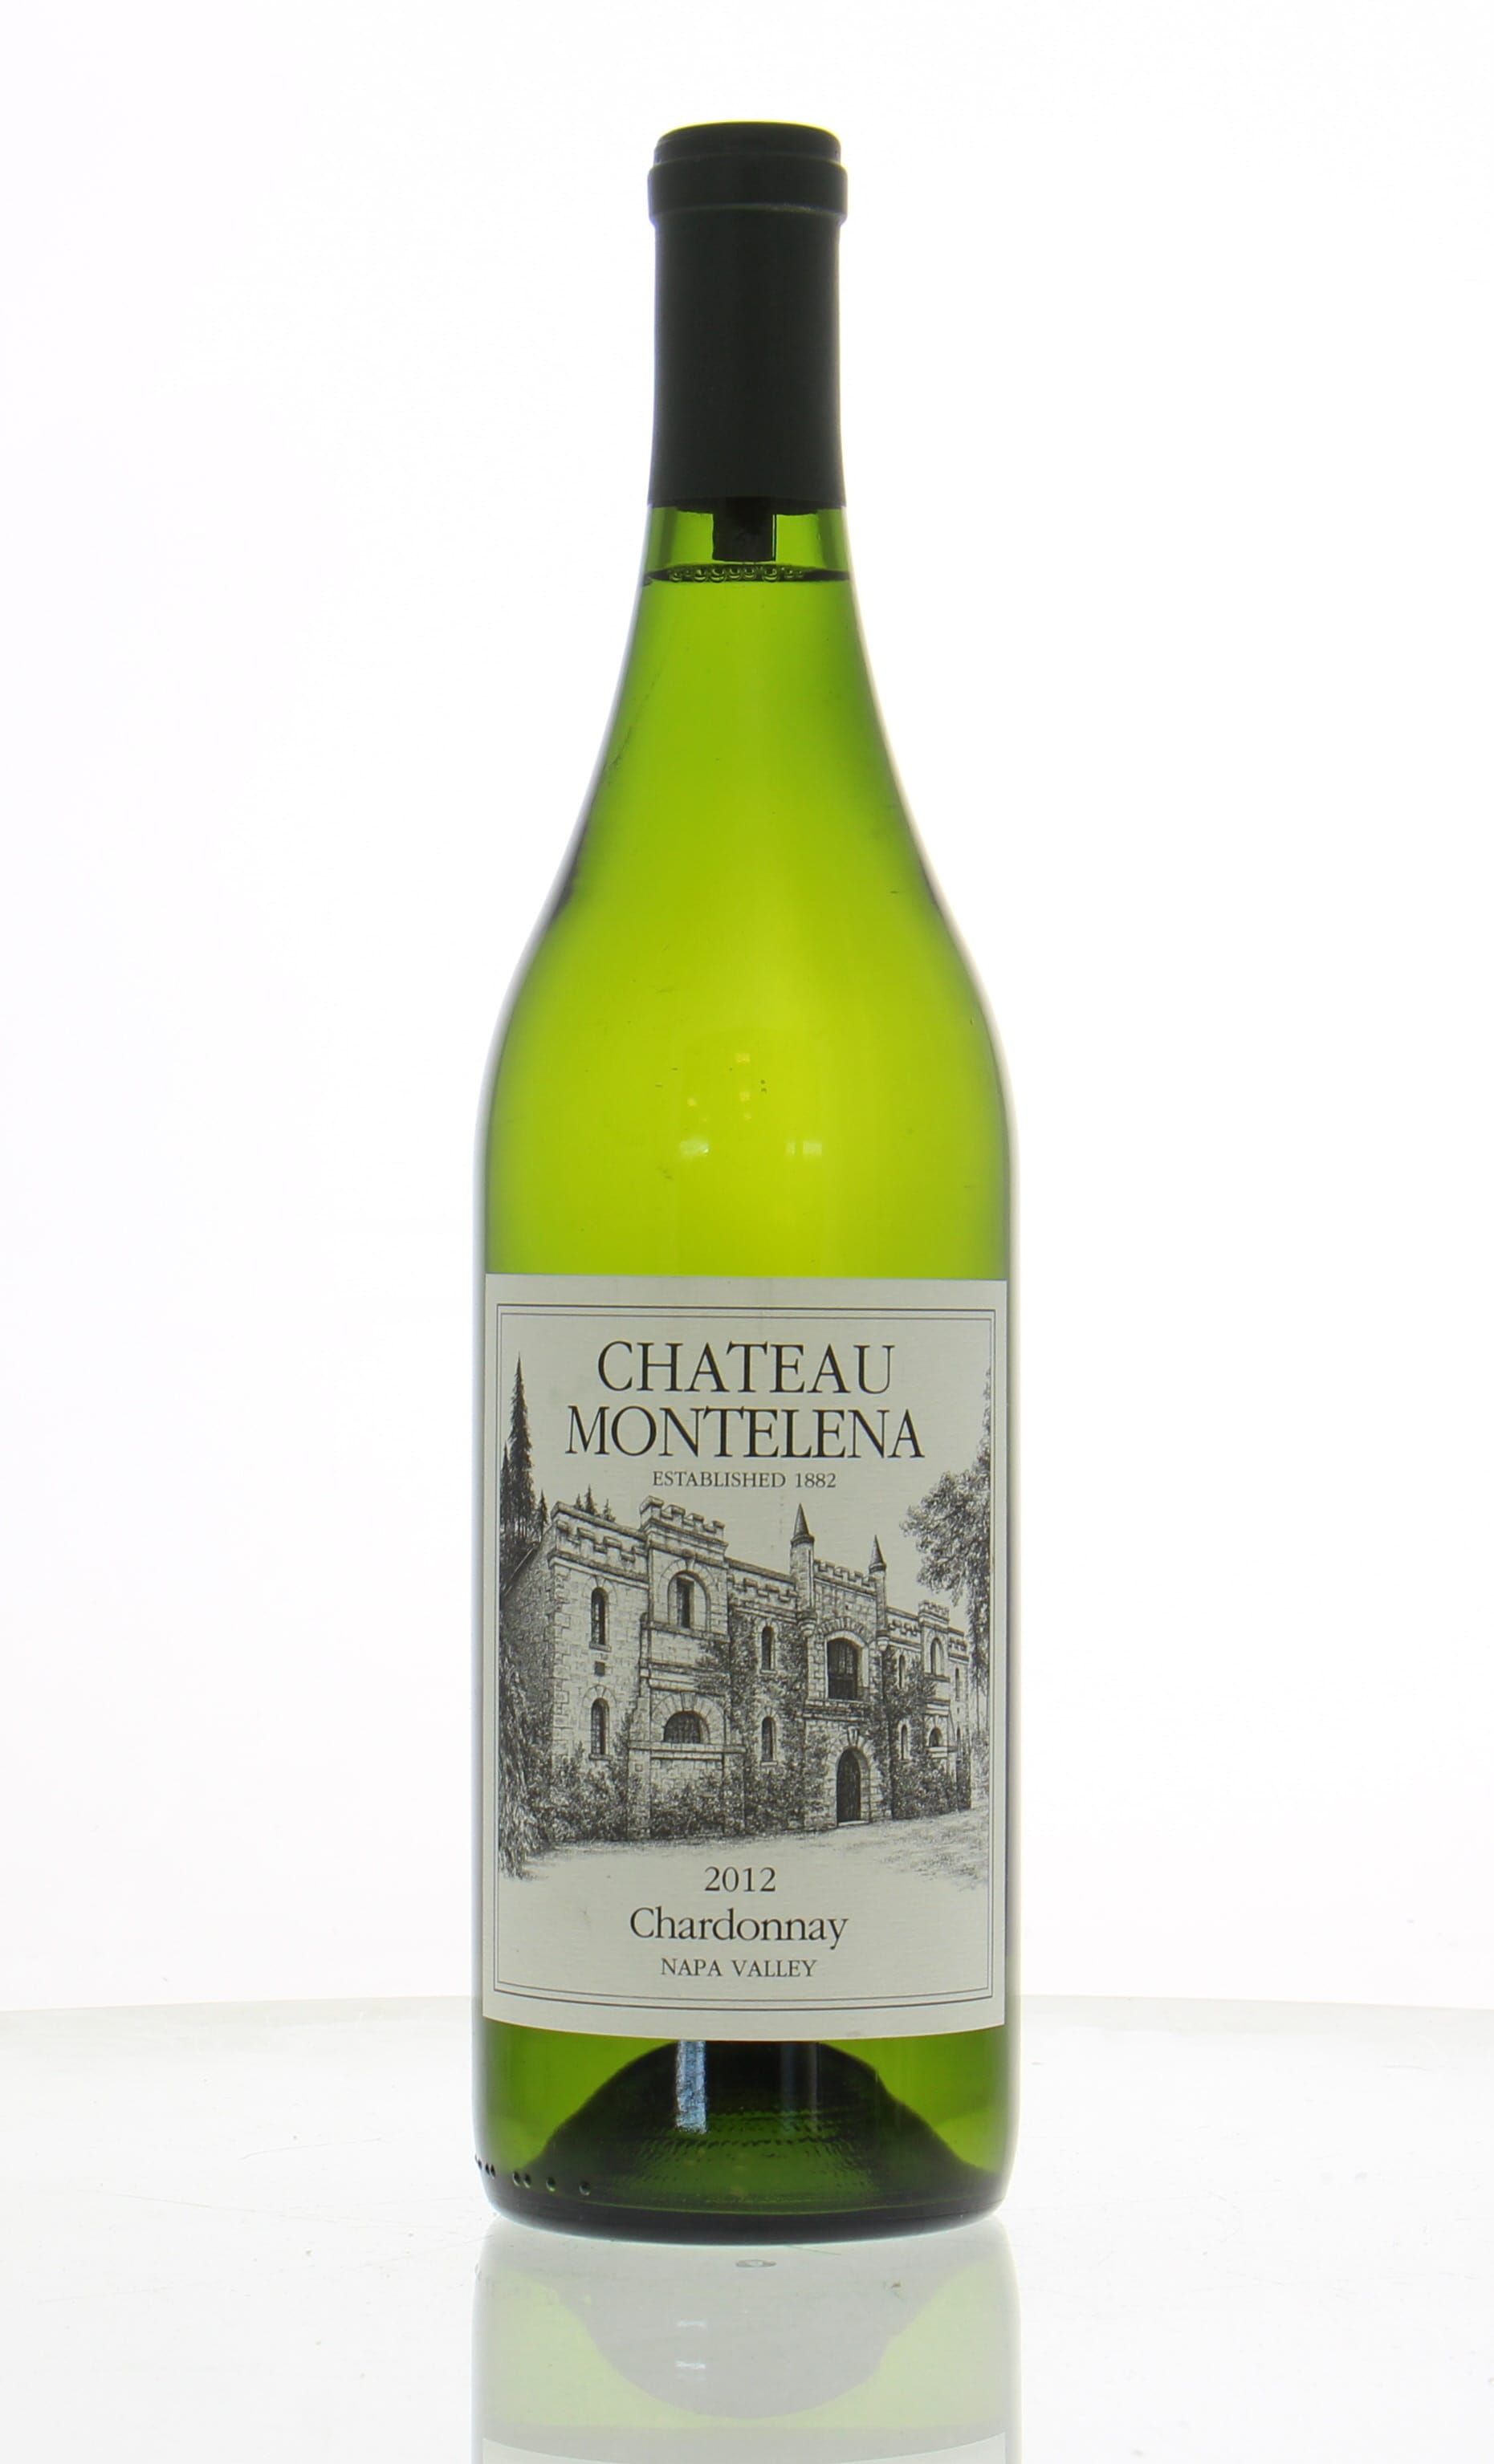 Chateau Montelena - The Chardonnay 2012